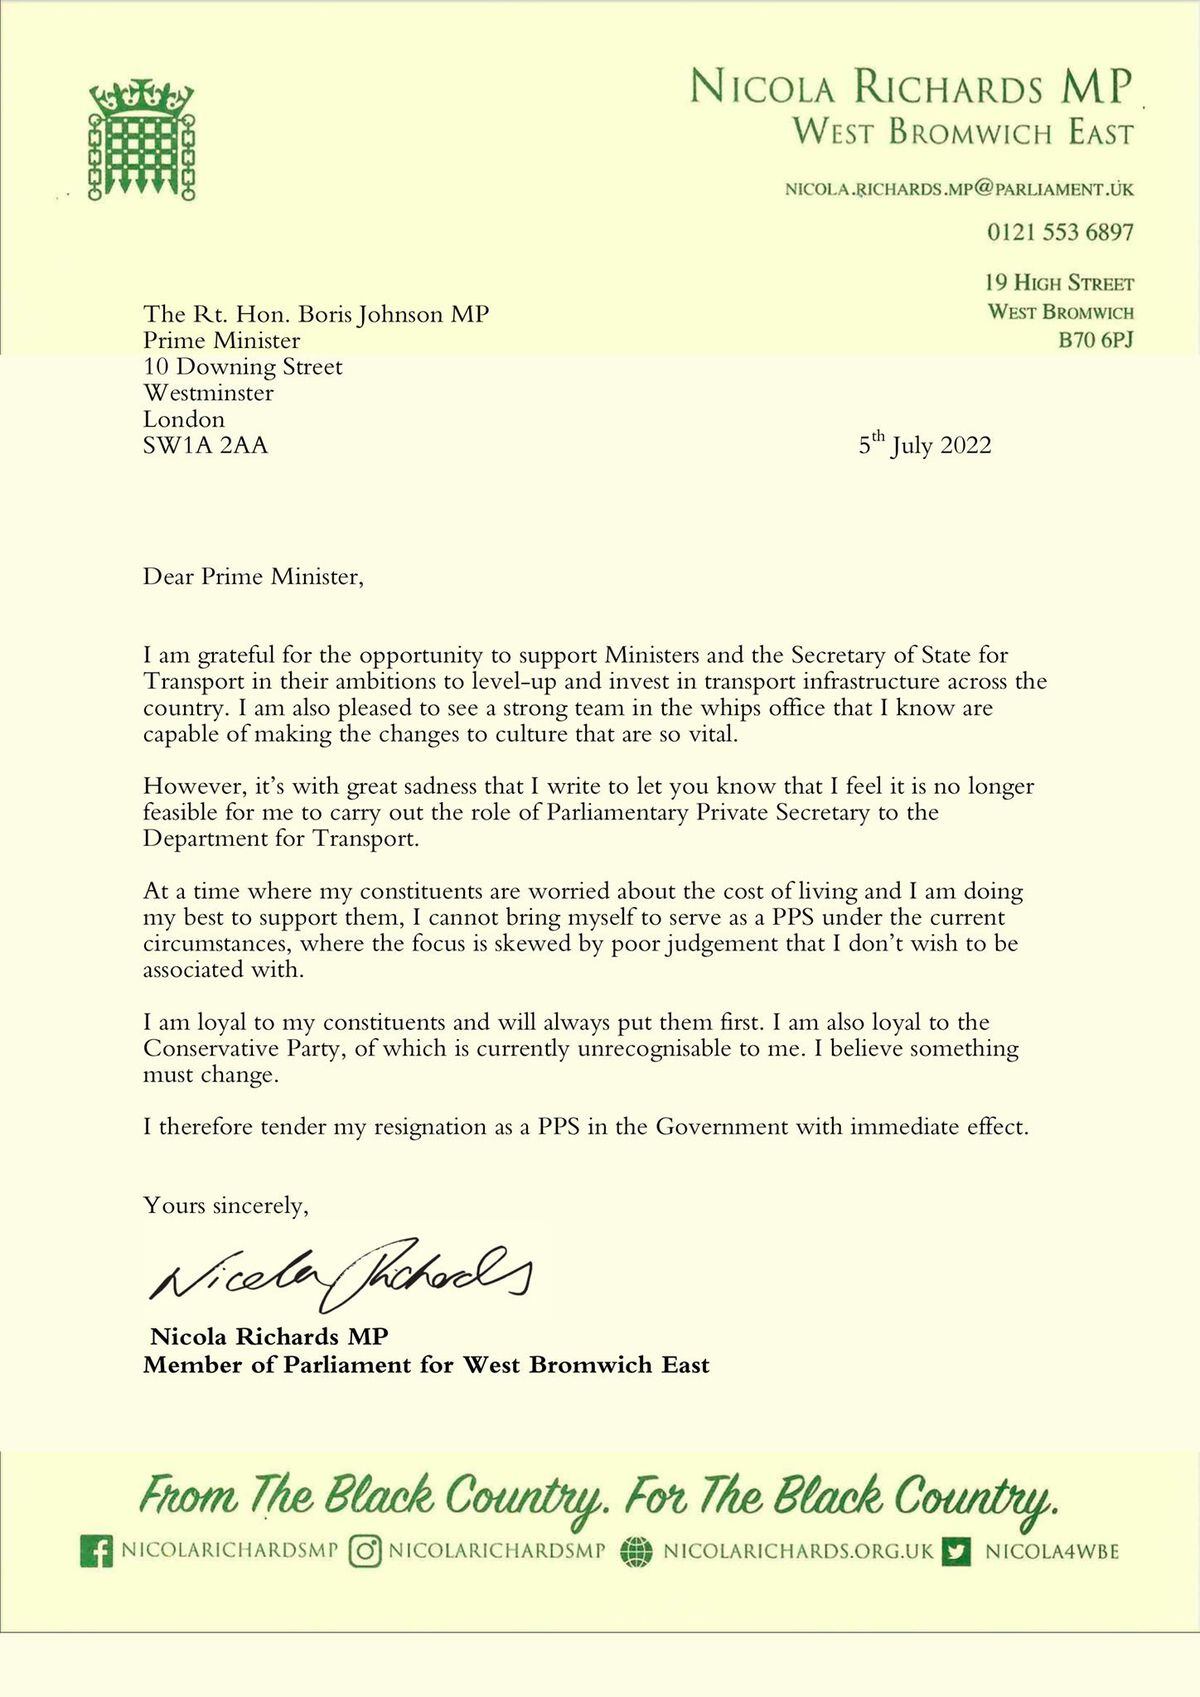 Nicola Richards' resignation letter 